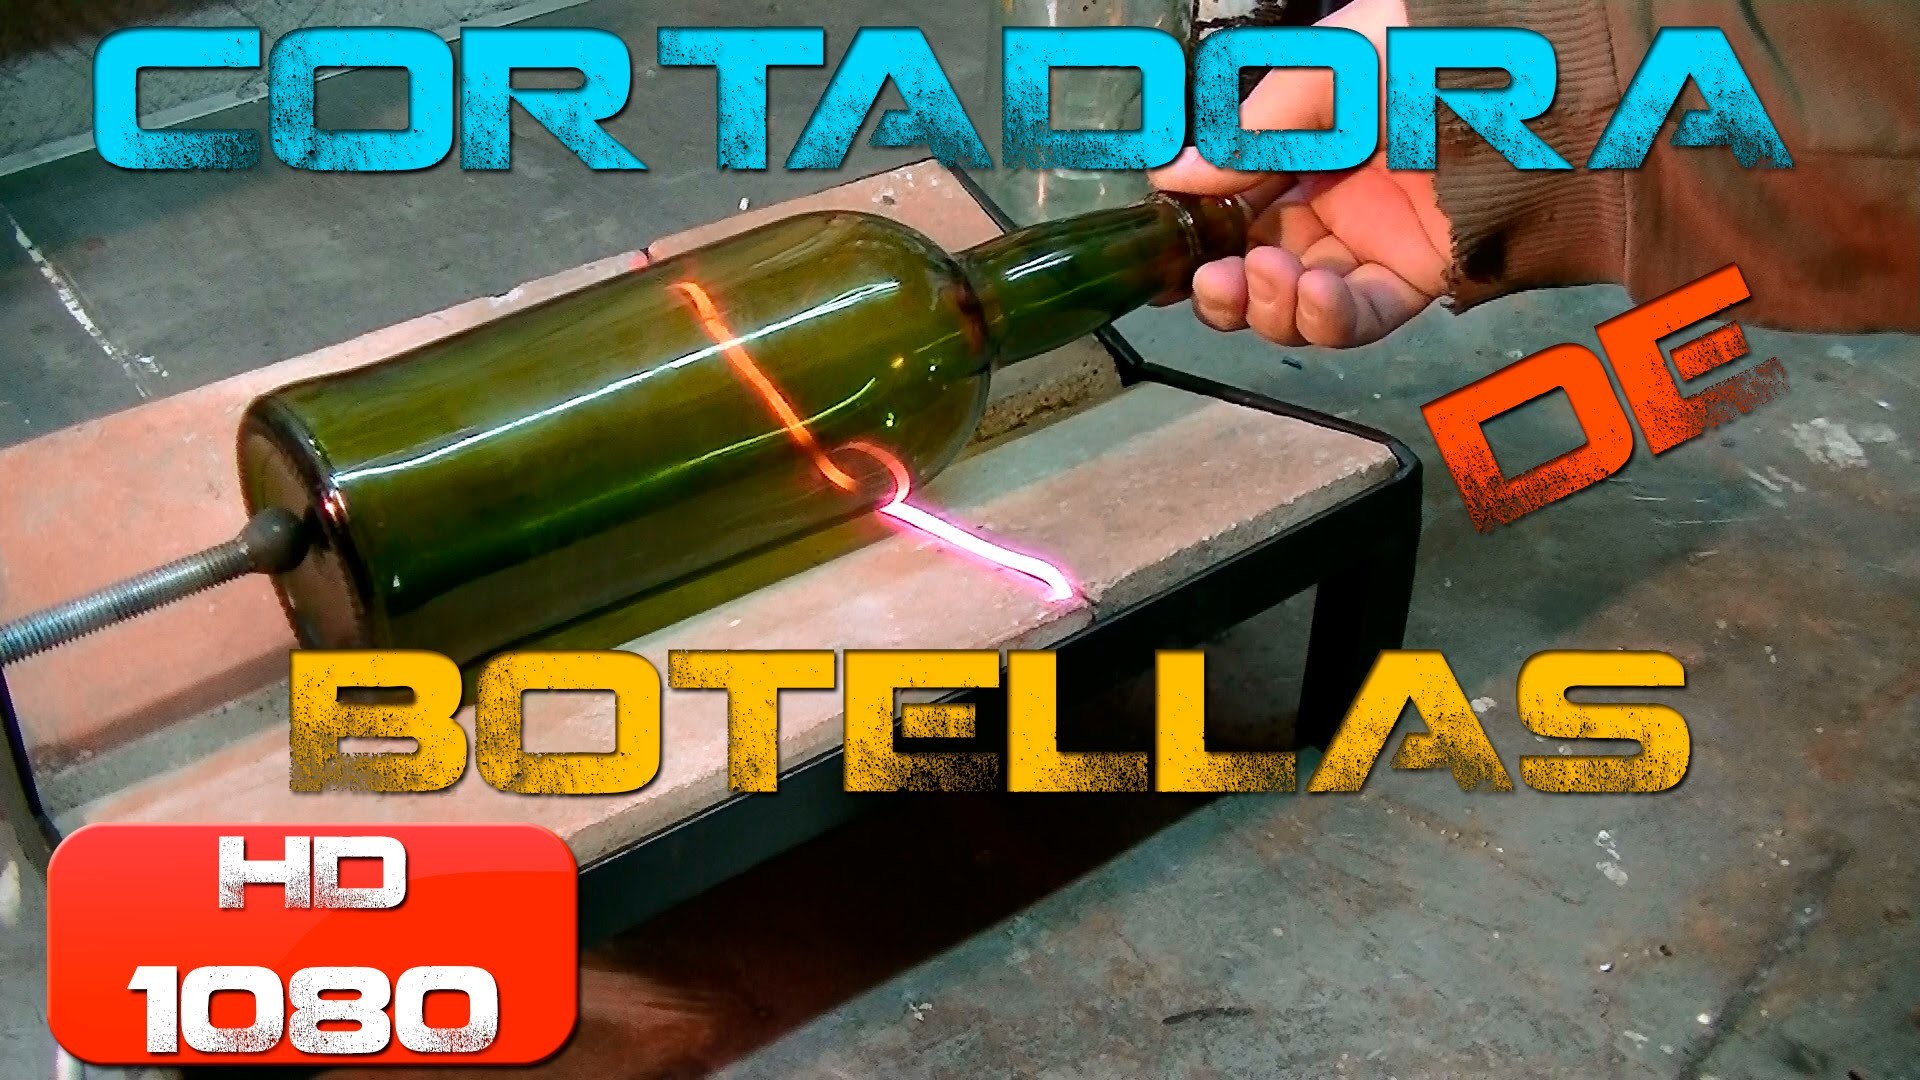 Tutorial - Cortadora de botellas, homemade bottle cutter